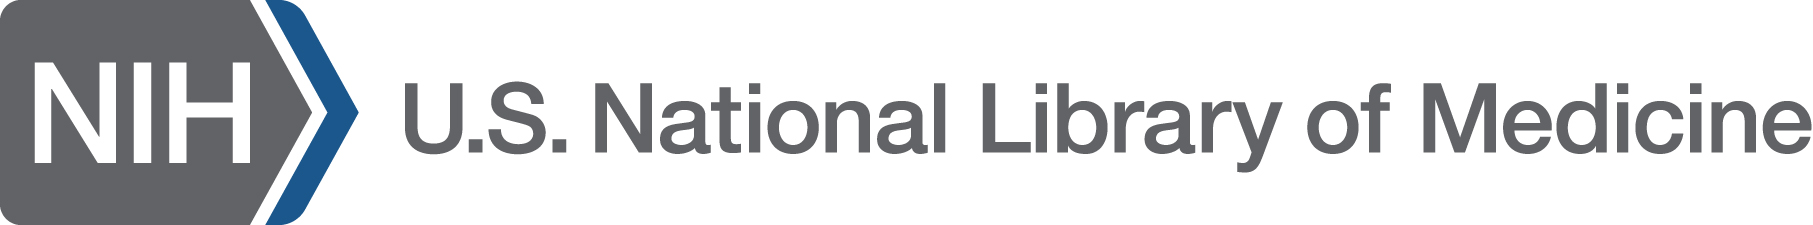 U.S. National Library of Medicine logo